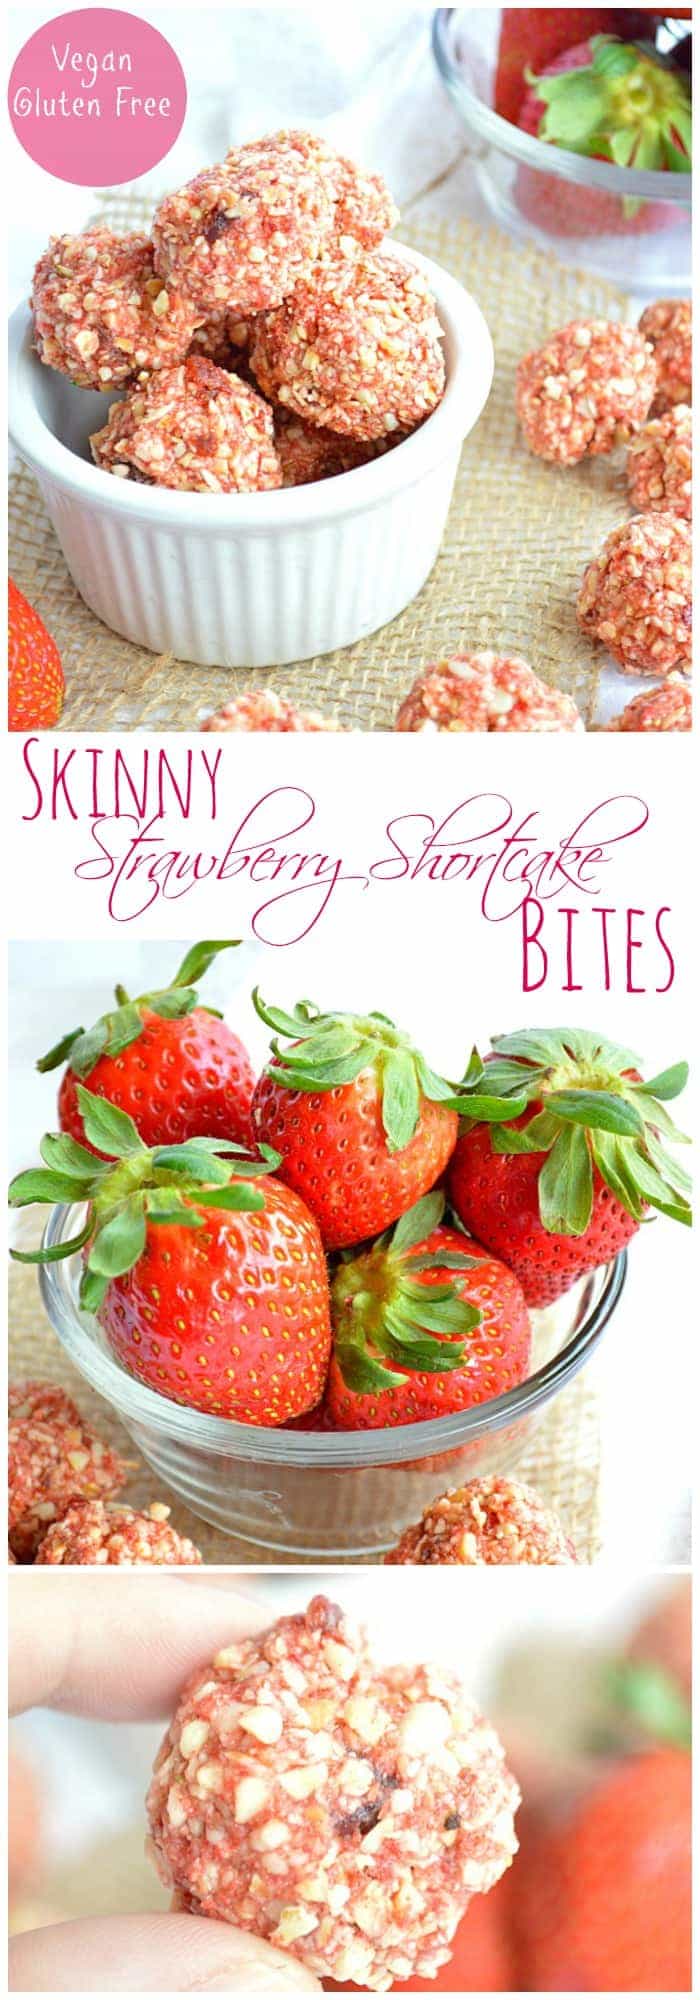 Skinny Strawberry Shortcake Bites. Gluten Free, Vegan, and Delicious! Perfect healthy snack.